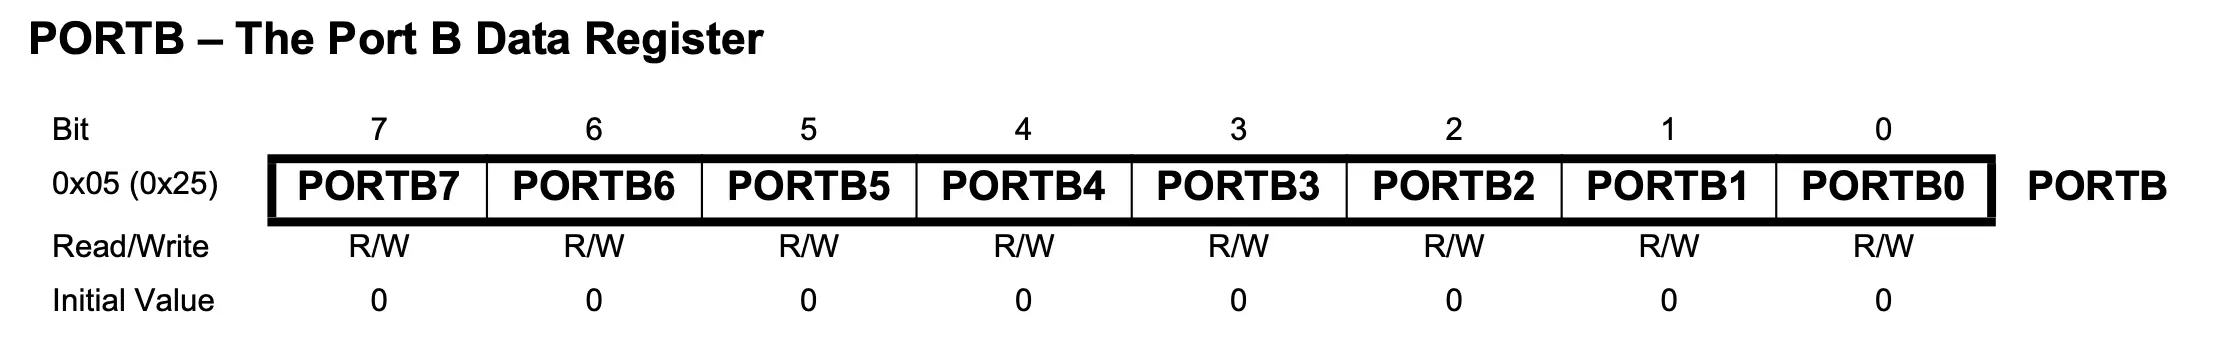 PORTB - The Port B Data Register